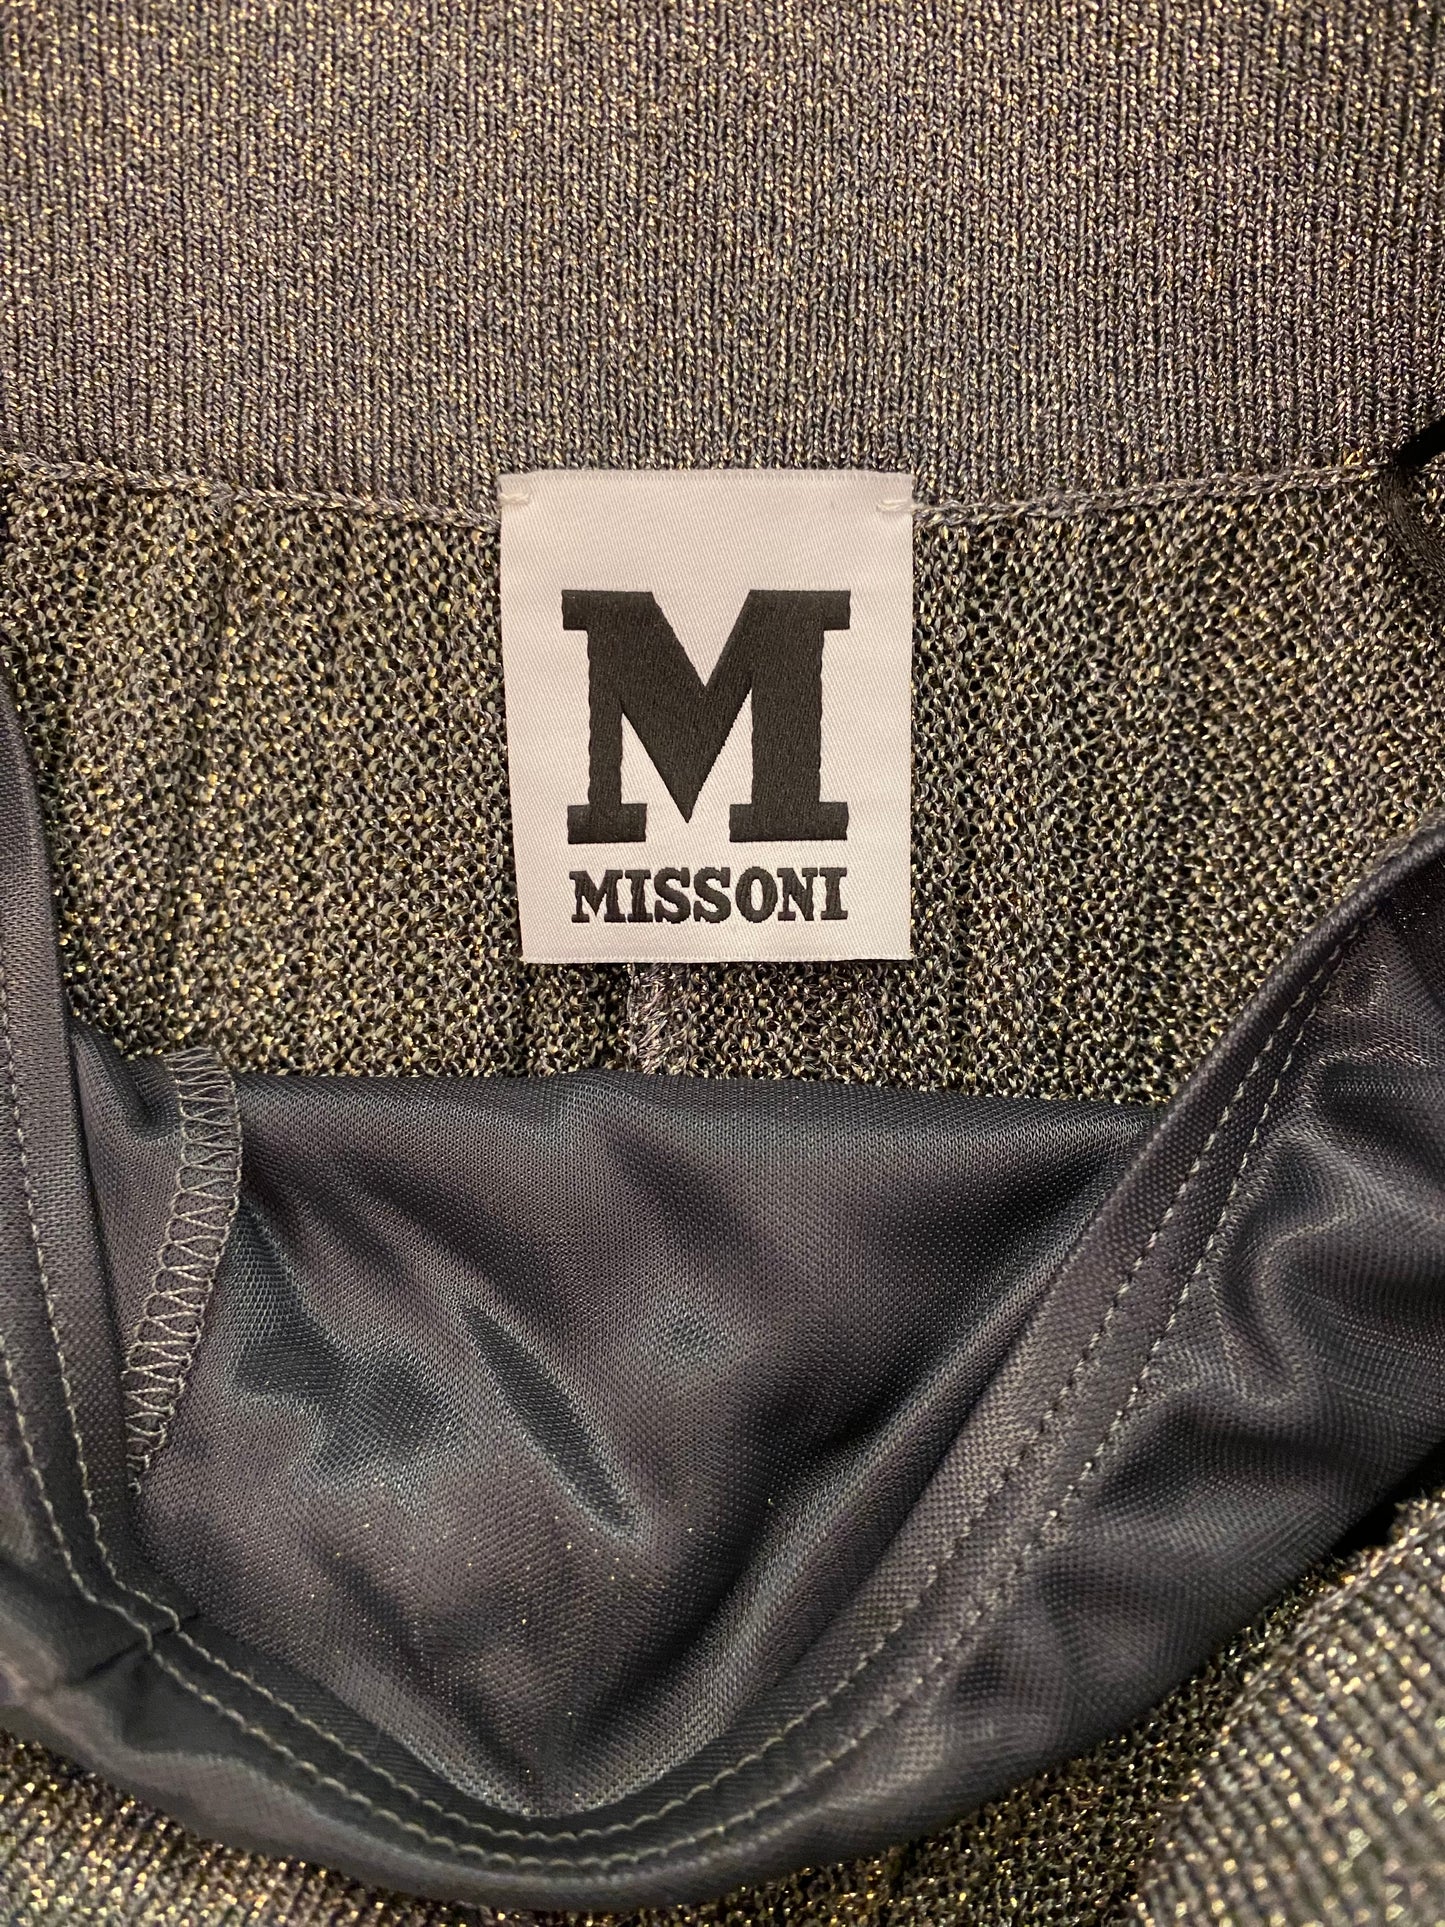 M MISSONI Gold Metallic Trousers Size It 40